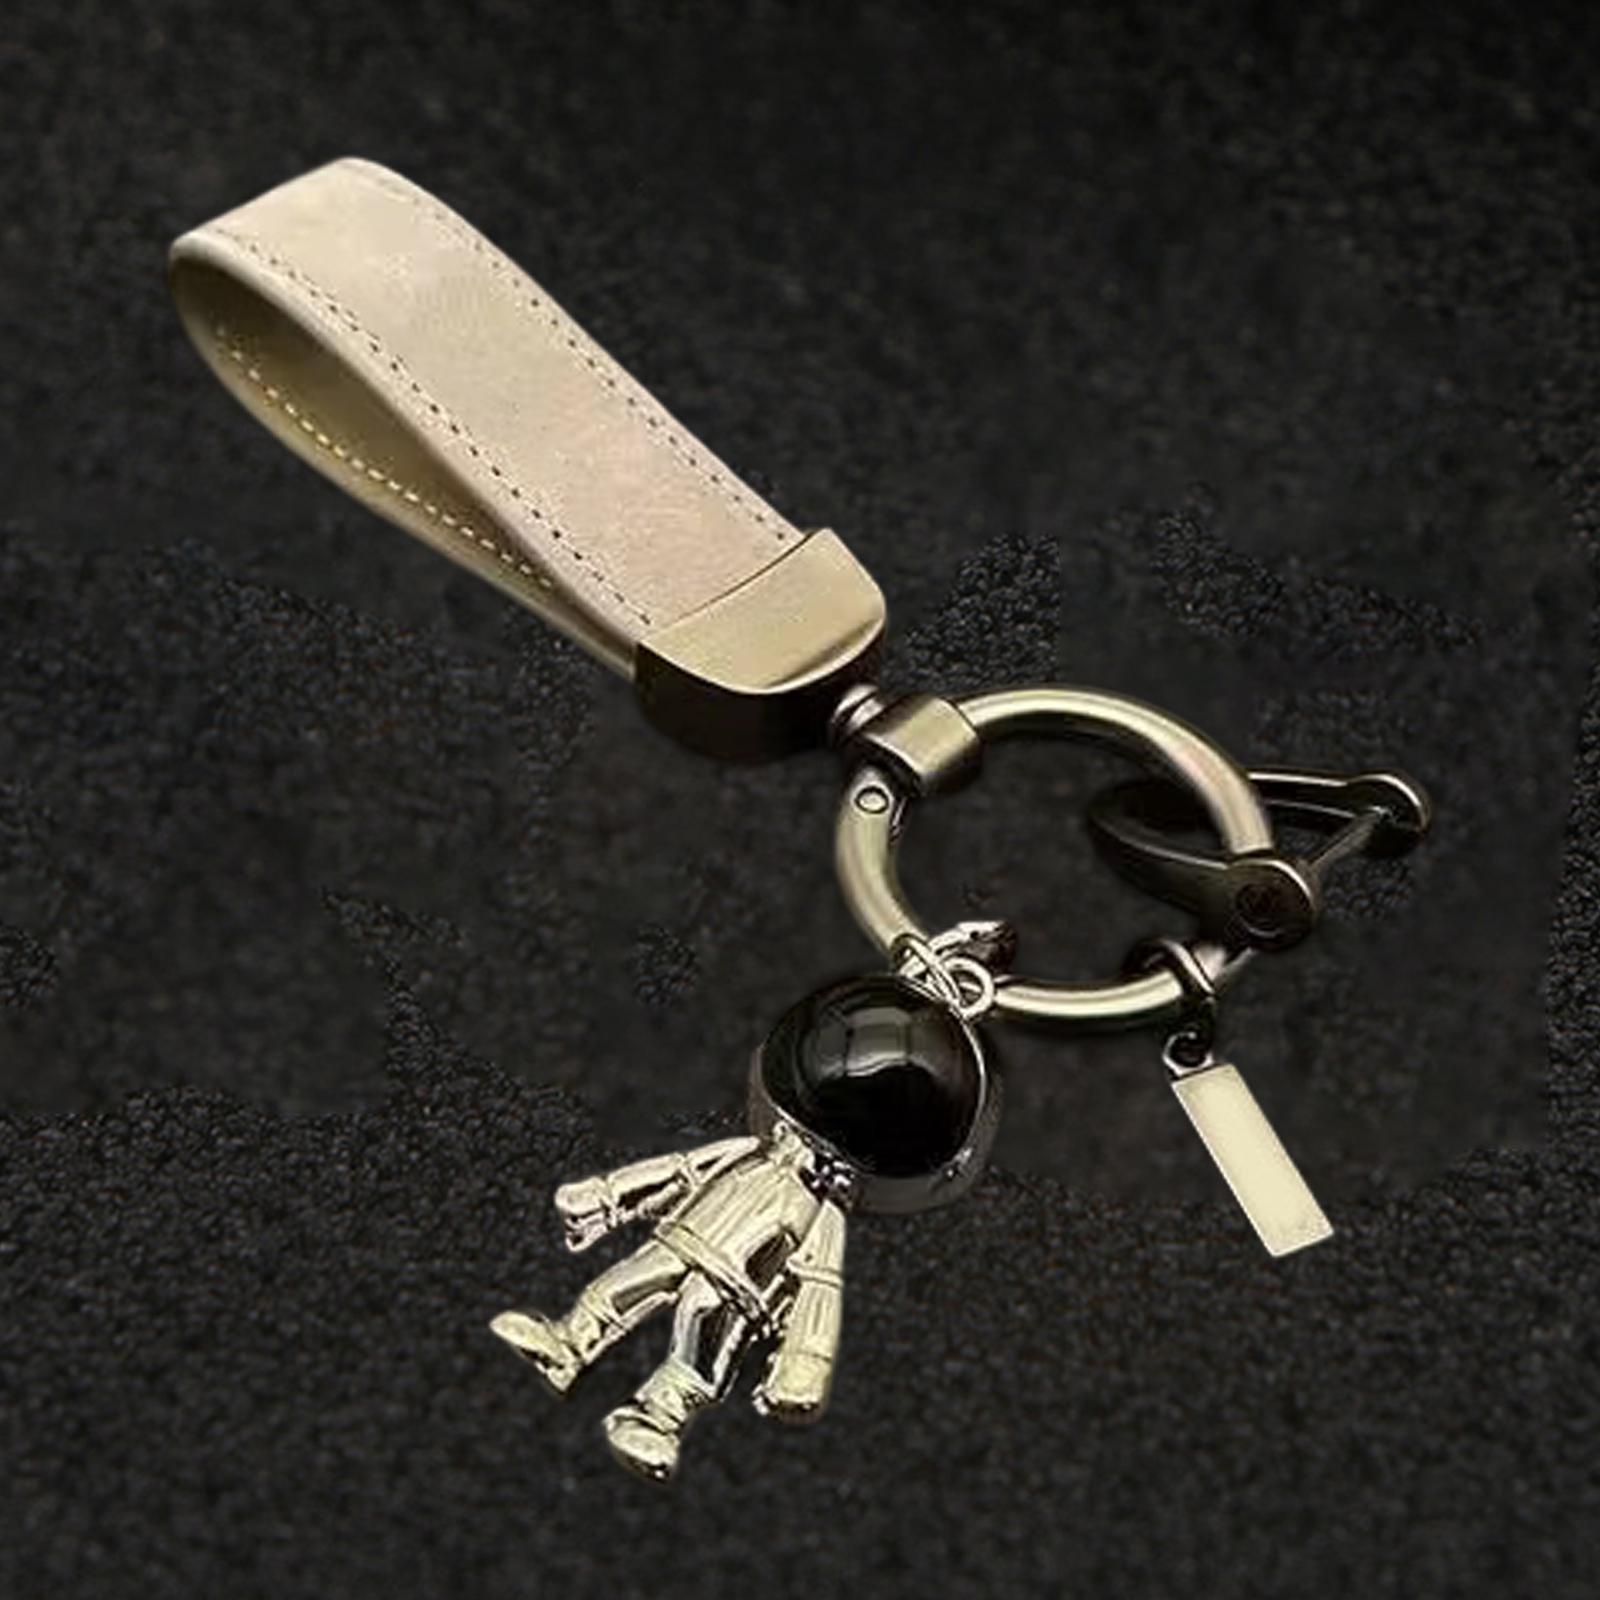 Car Key Chain Decoration Fashion Key Ring Clip for Handbag Purse Wallet Gray